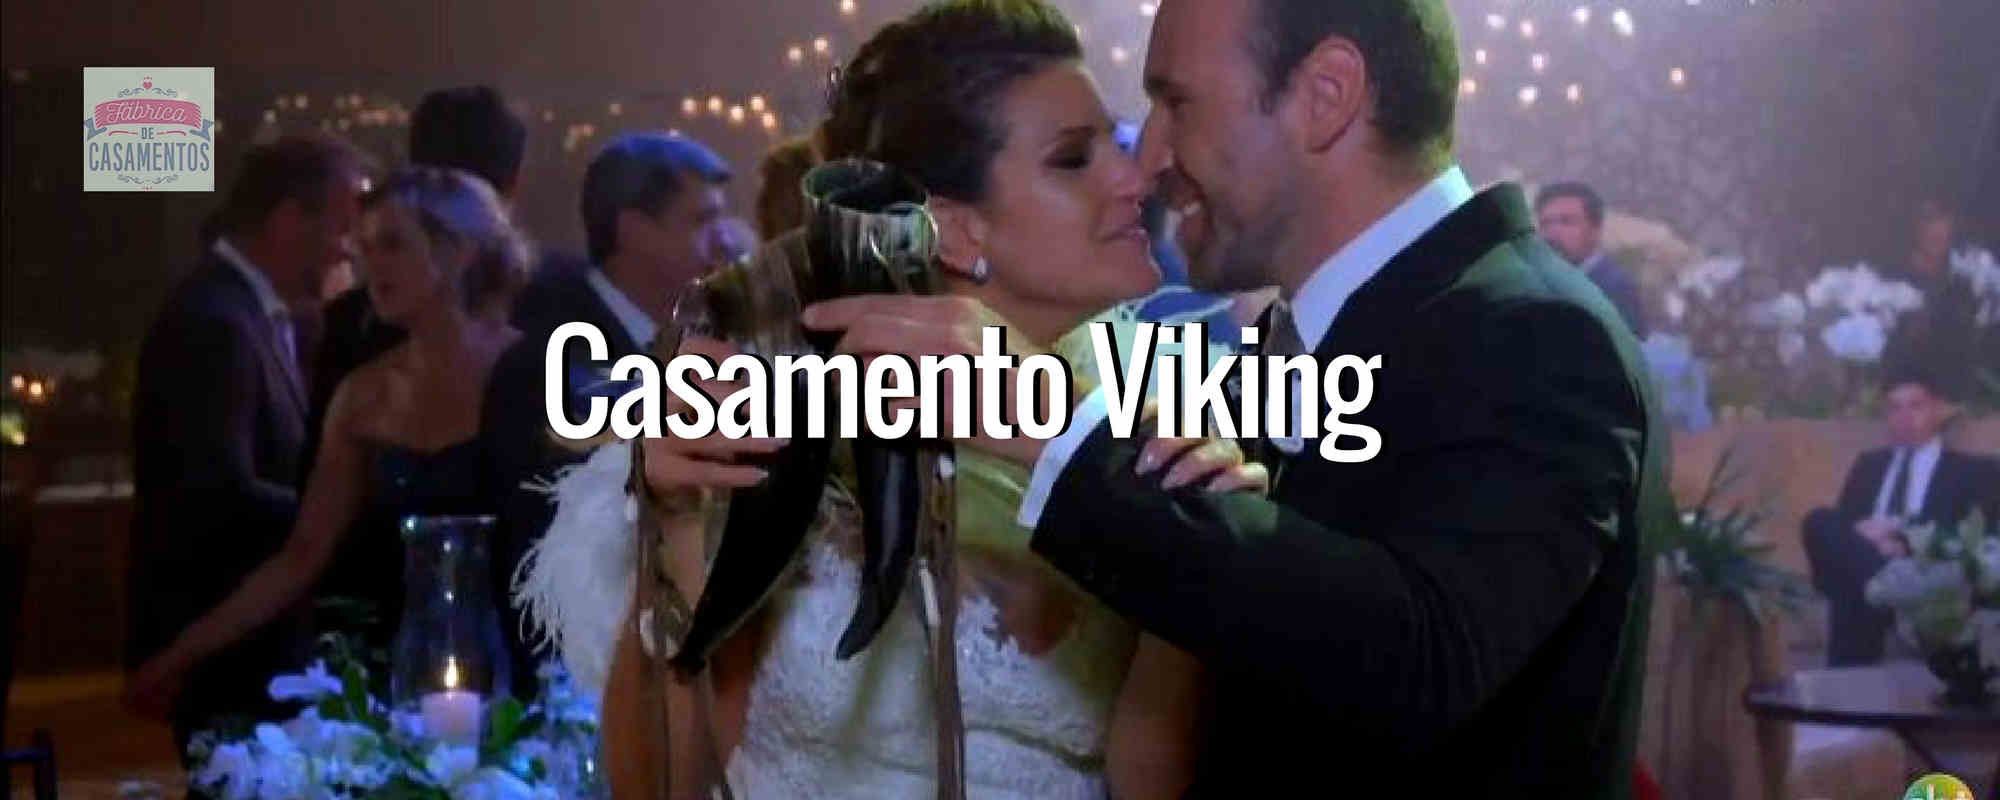 Casamento Viking Fábrica de Casamentos - Mariana e Eli